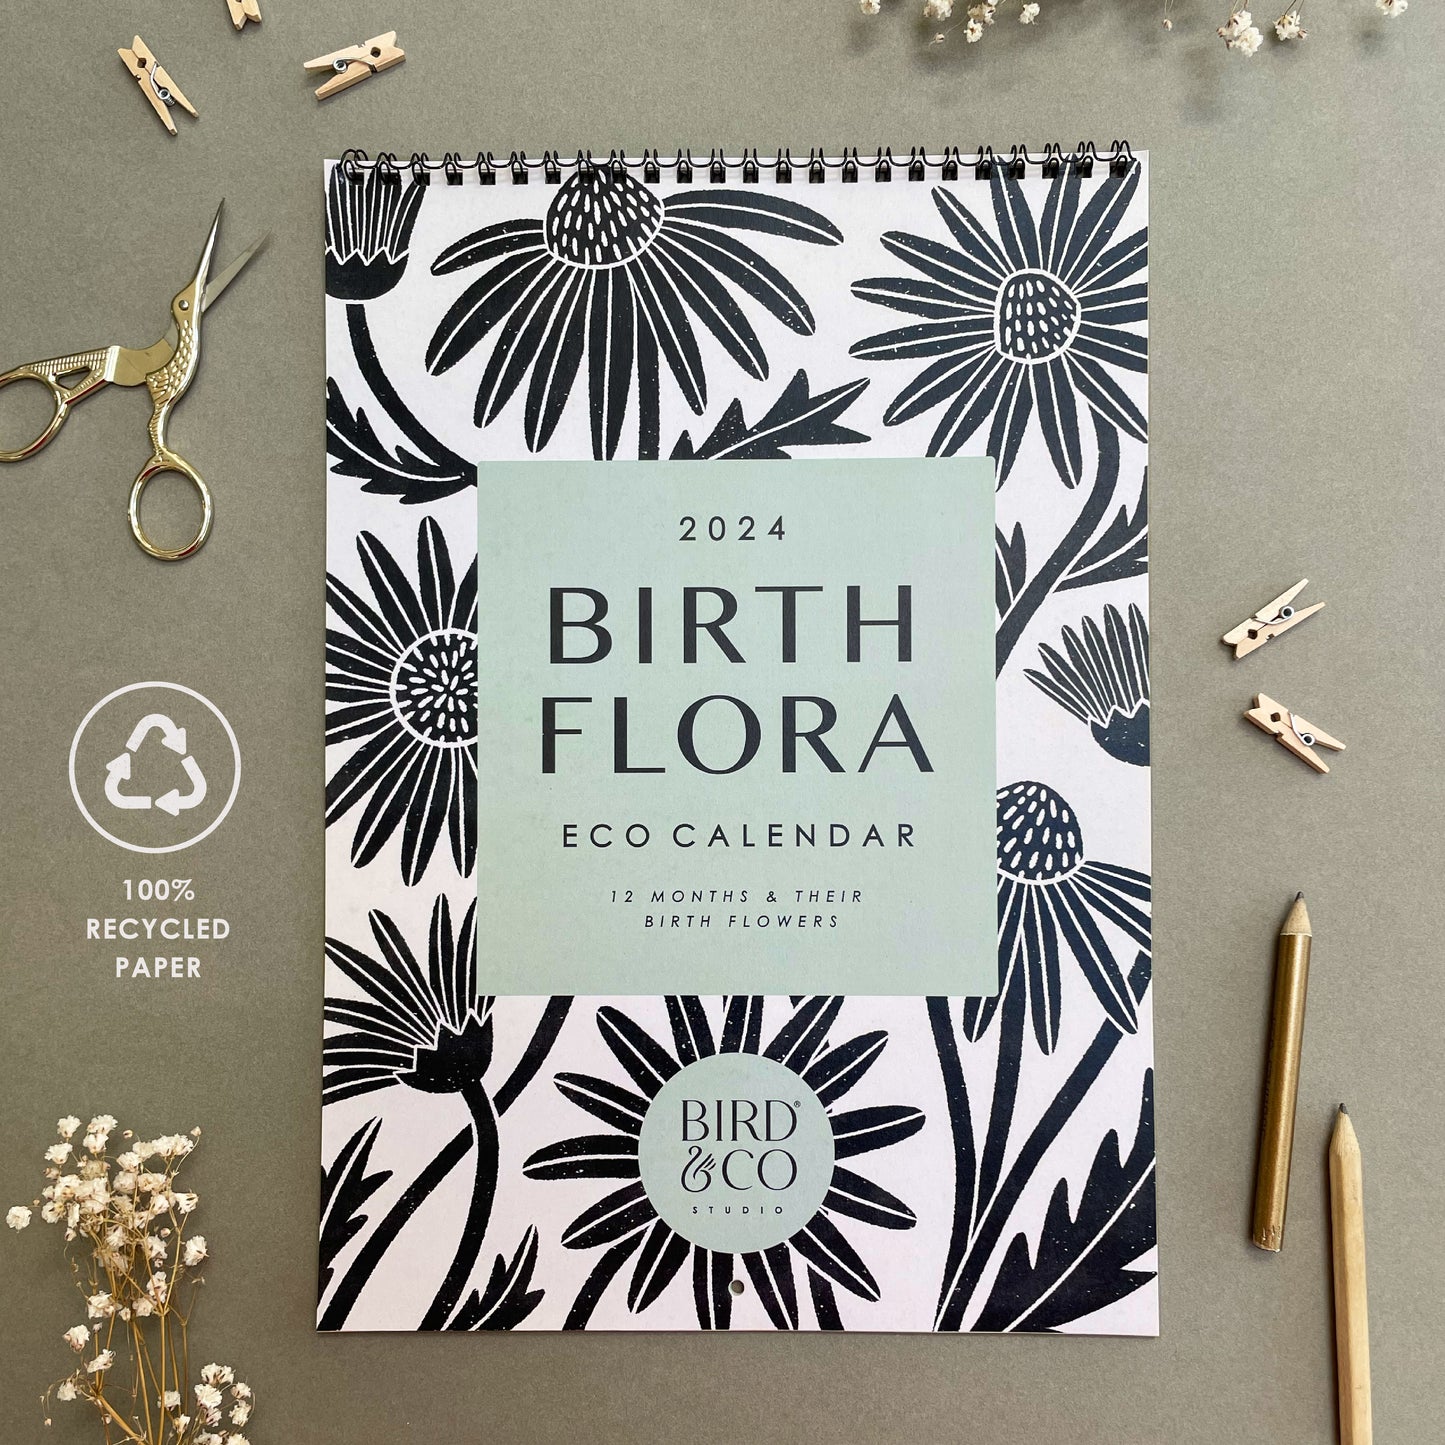 2024 Birth Flora Eco Calendar